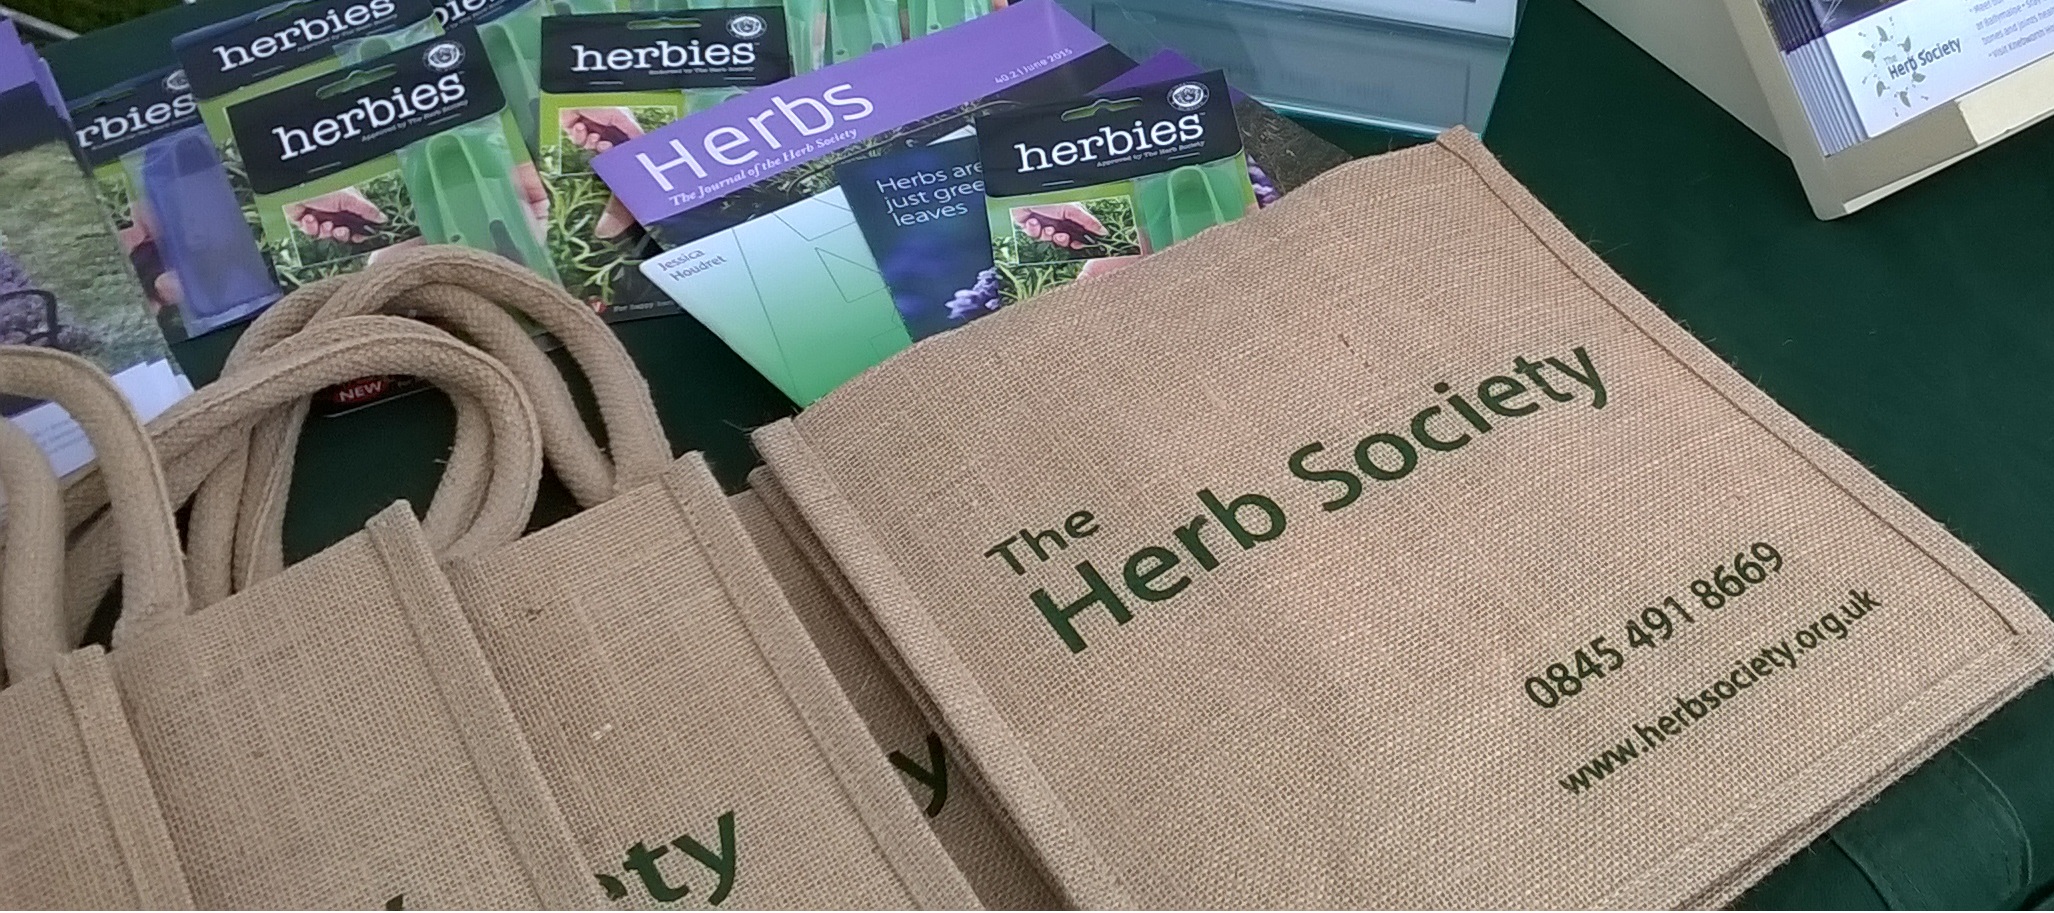 herb society membership pack